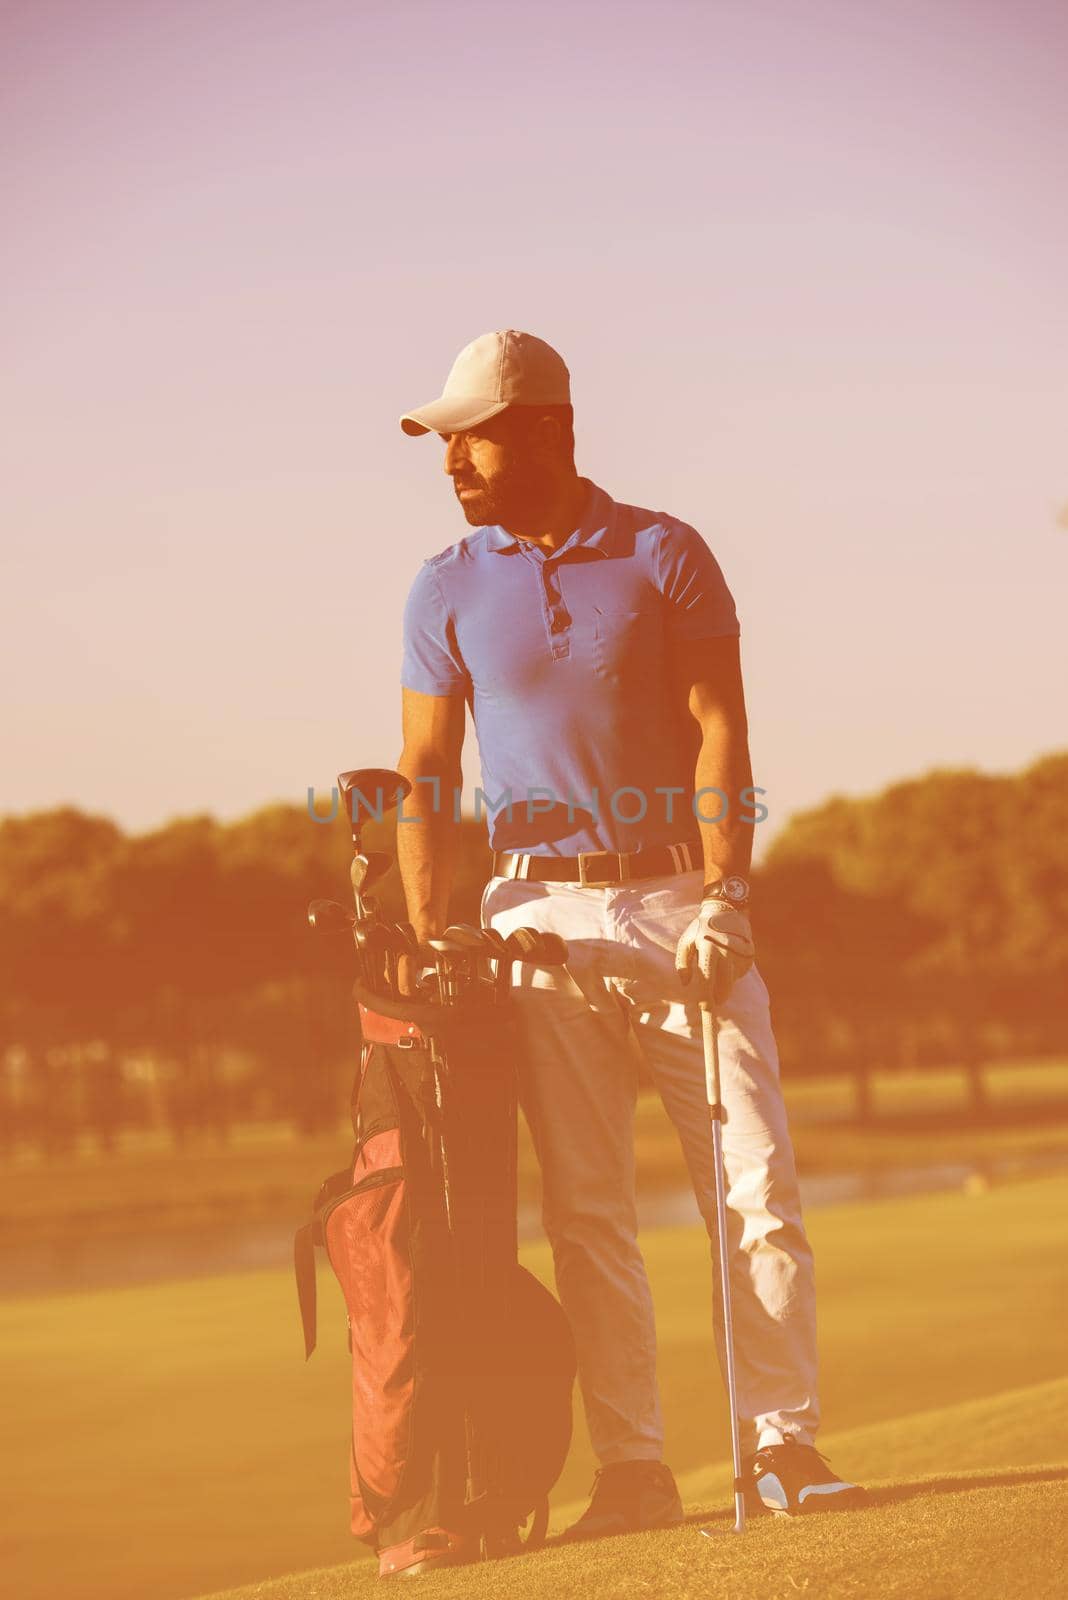 golfer  portrait at golf  course by dotshock